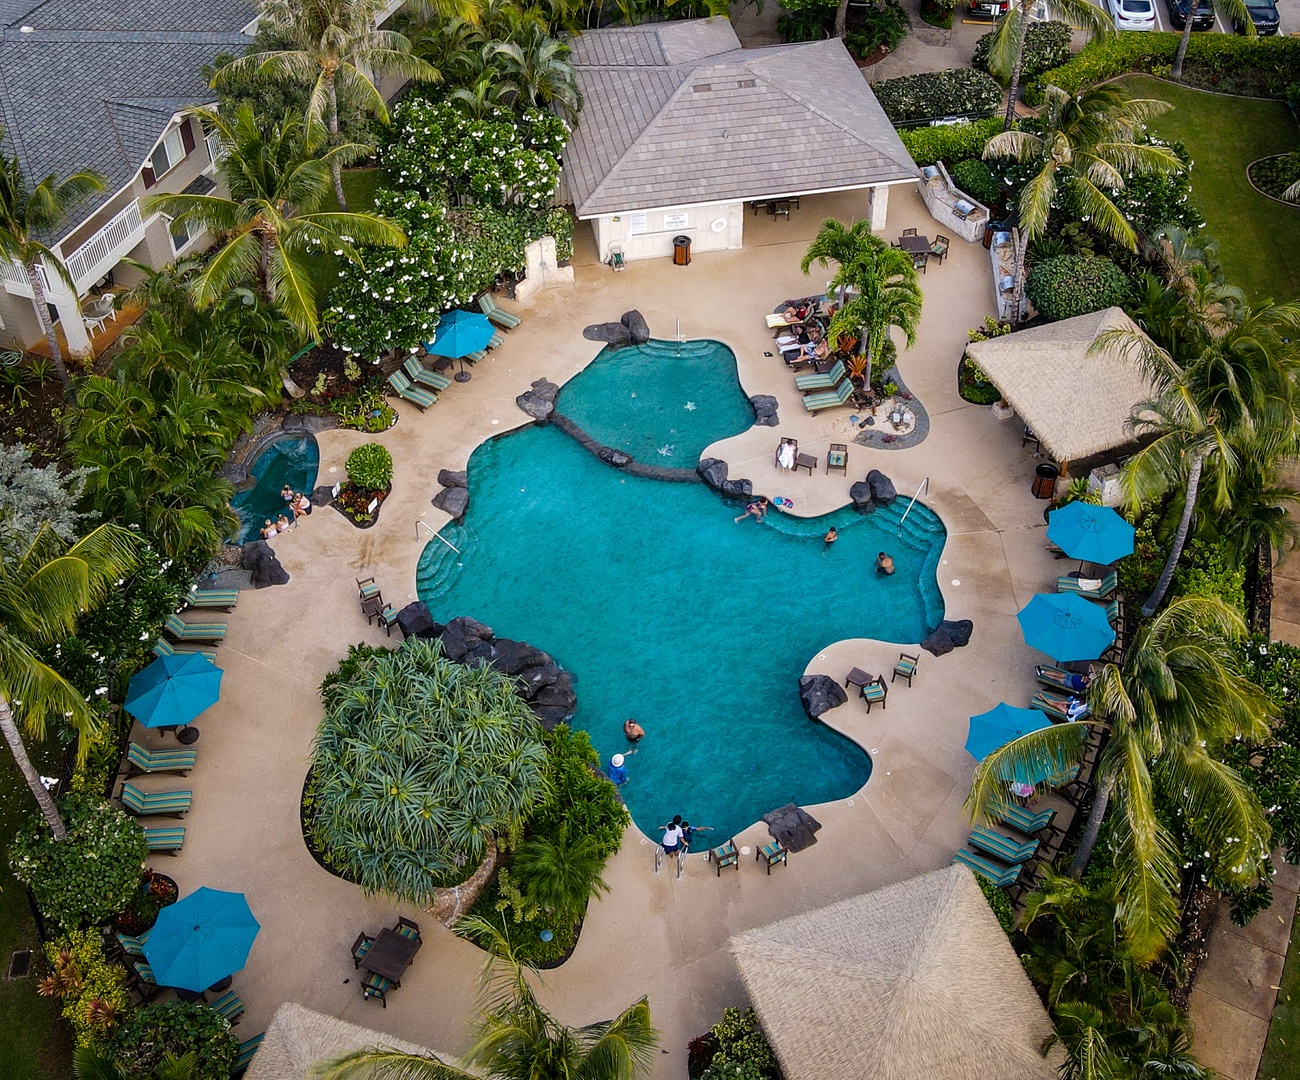 Kapolei Vacation Rentals, Ko Olina Kai 1057B - An aerial view of the pool and cabana area.